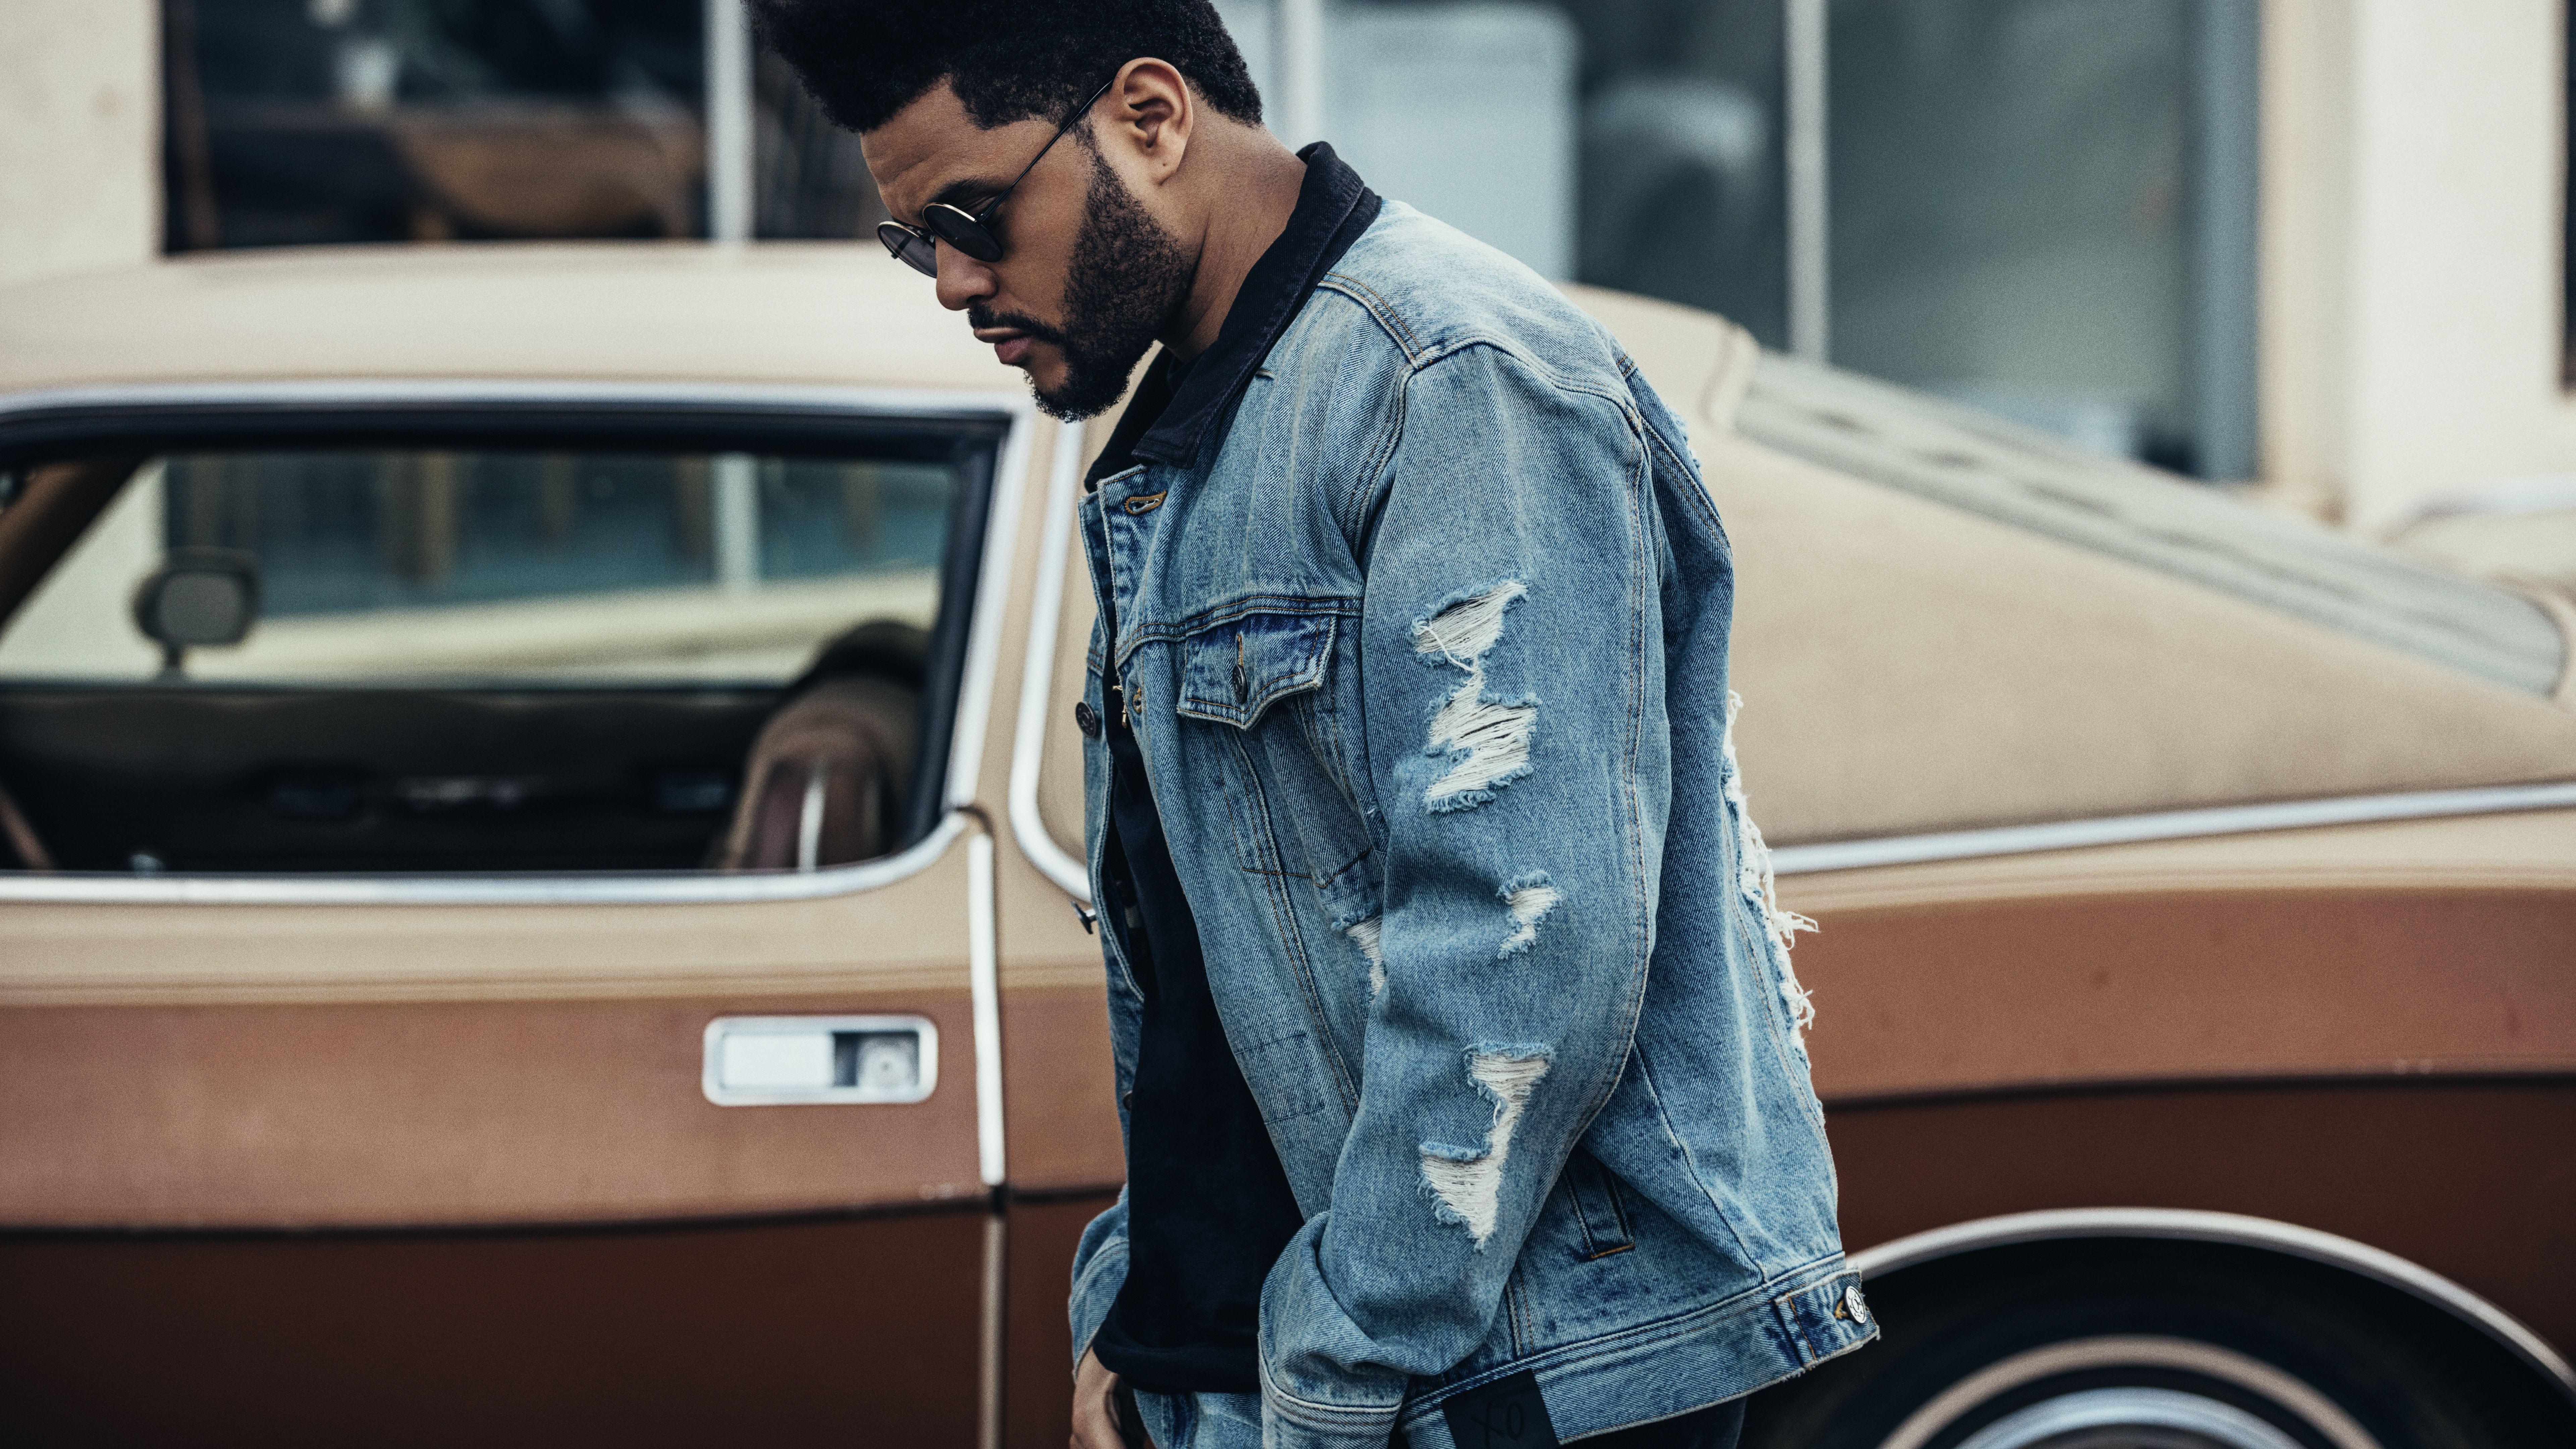 The Weeknd Desktop Wallpapers - Top Free The Weeknd Desktop Backgrounds